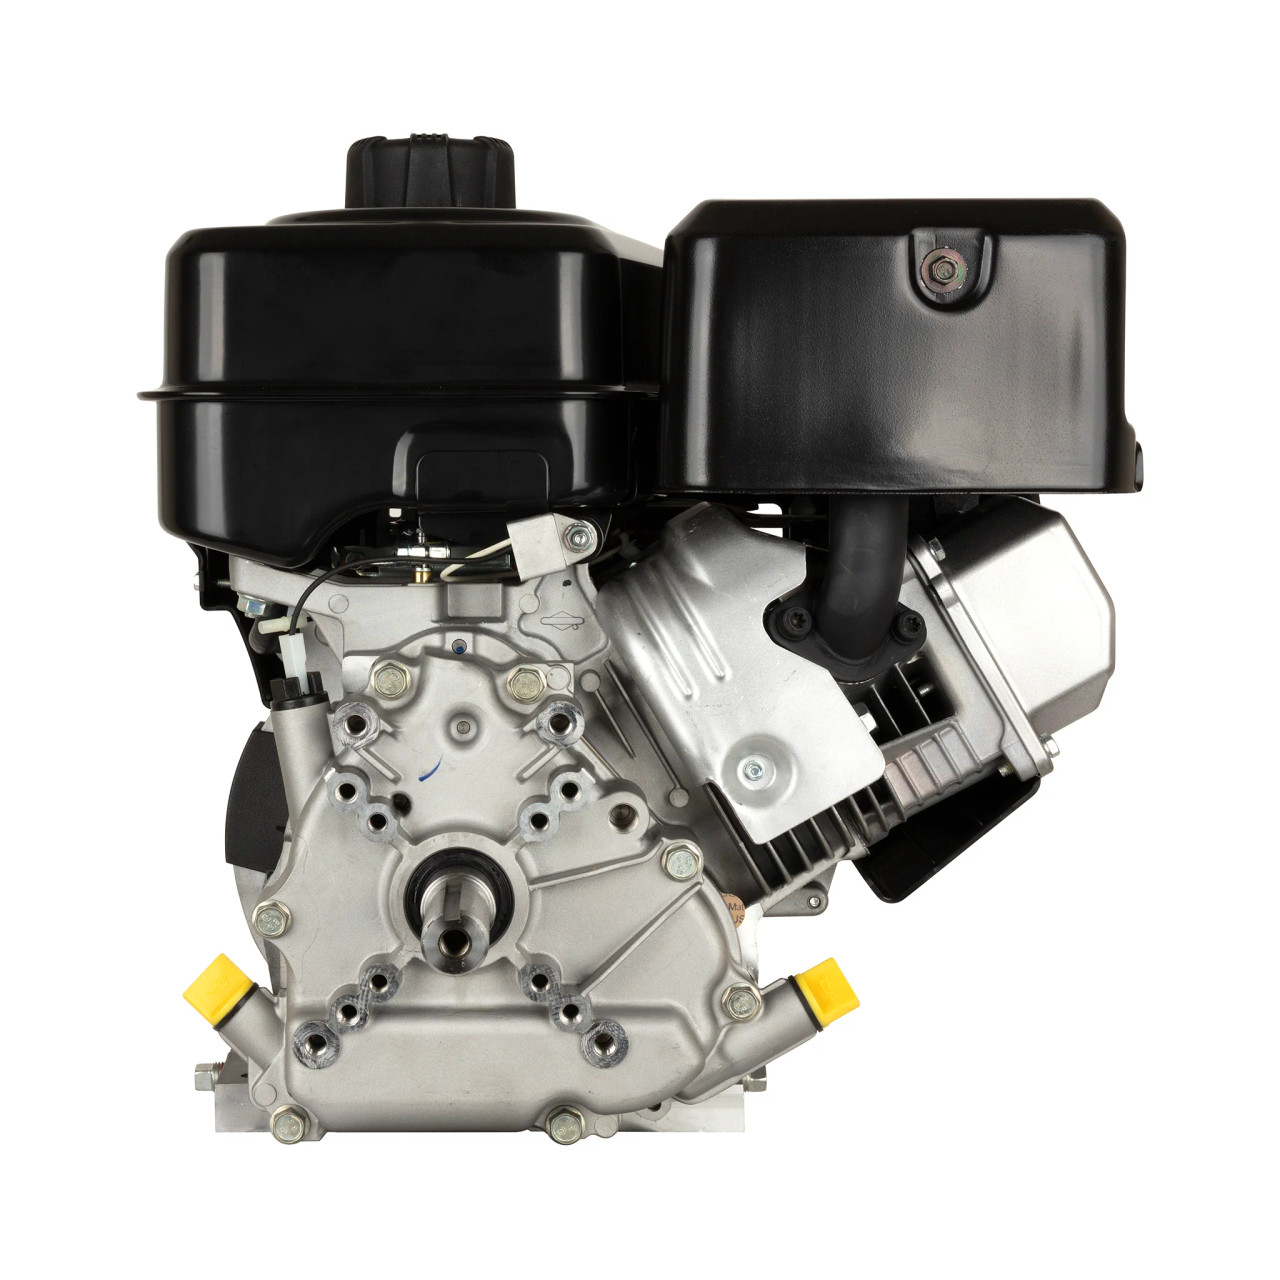 Vanguard® 10.0 HP 305cc Horizontal Shaft Engine
19L232-0037-F1